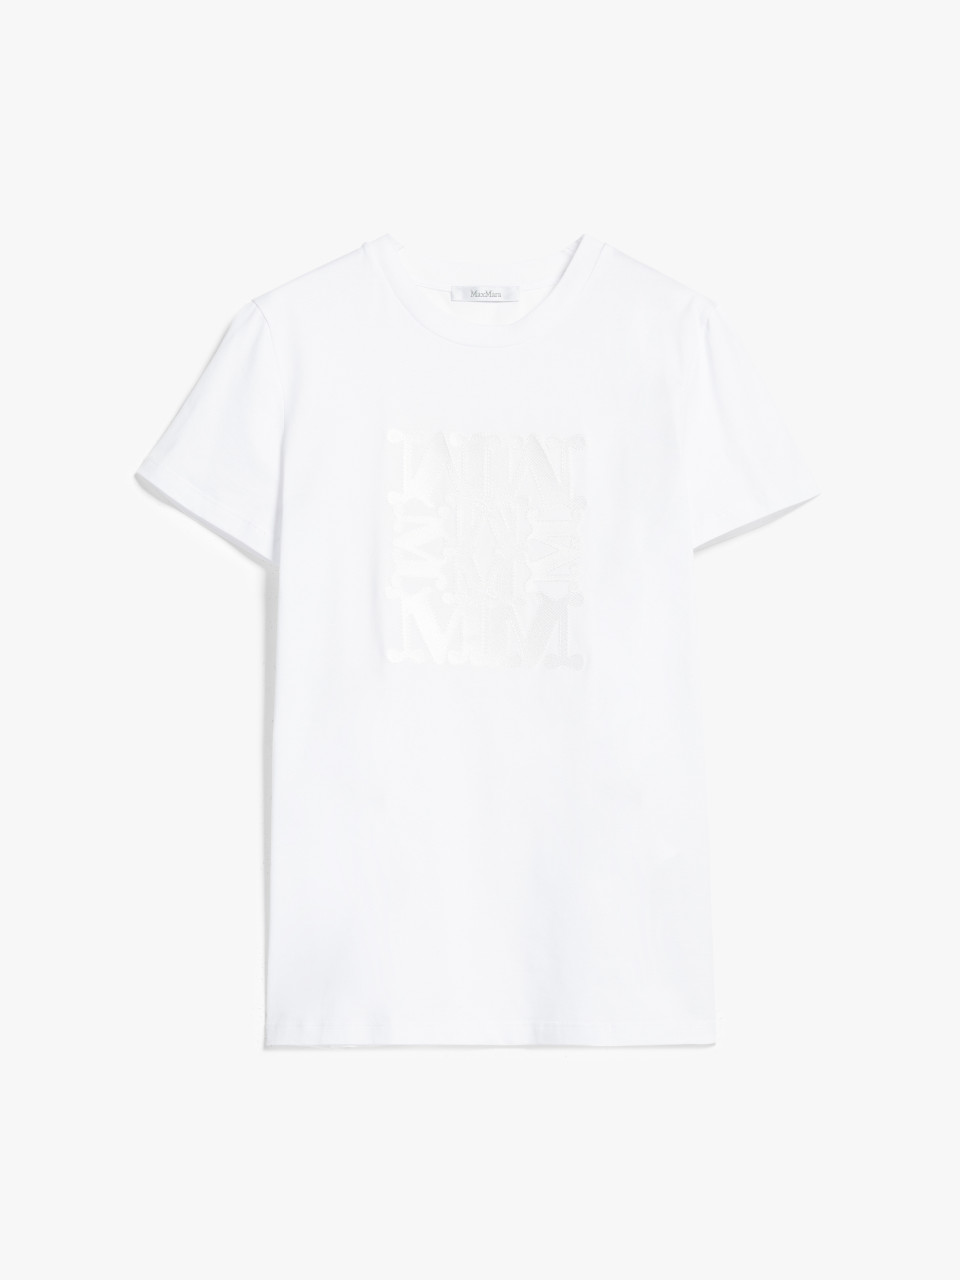 Max Mara Park Cotton Jersey Monogram T-Shirt in White